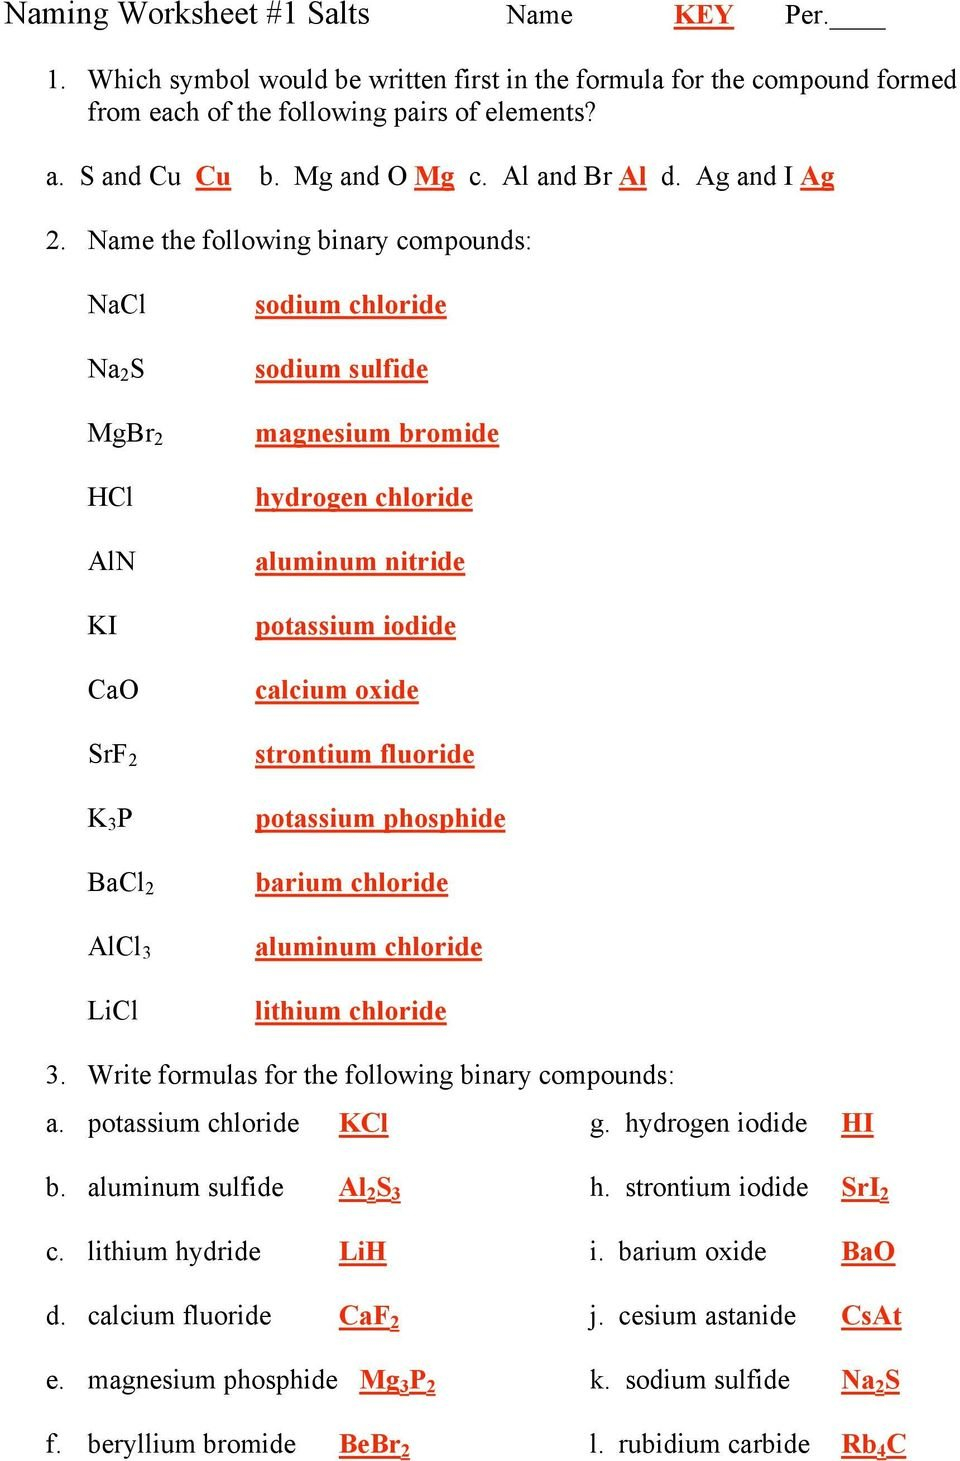 Naming Worksheet 1 Salts Name Key Per  Pdf Together With Naming Compounds Worksheet Answer Key